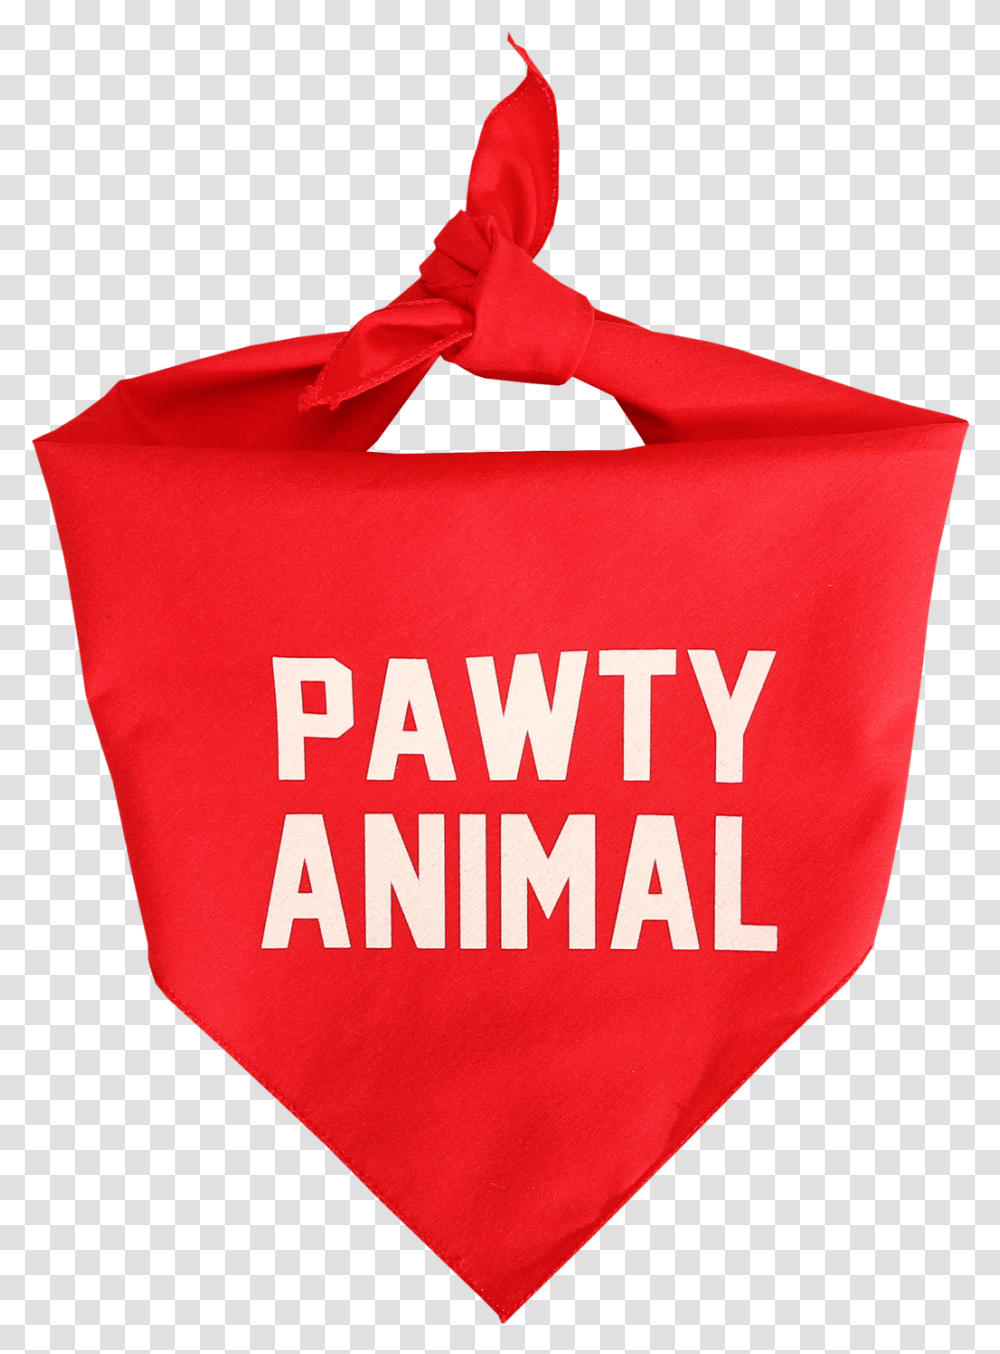 Pets Frenchie Pawty Animals Red Bandana Illustration, Bag, Sack, Shopping Bag, Tote Bag Transparent Png